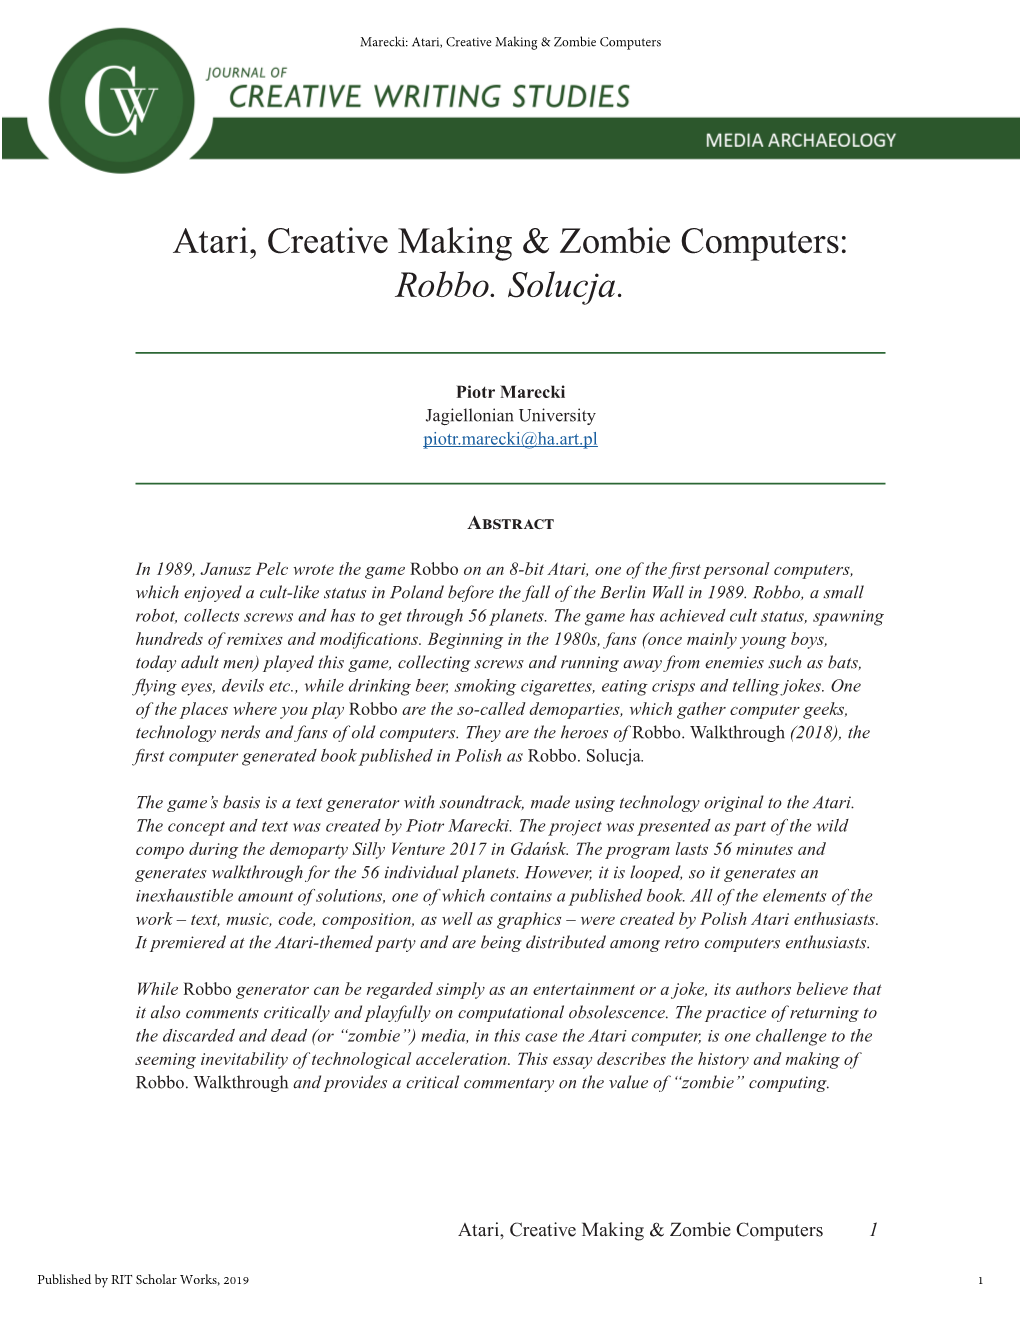 Atari, Creative Making & Zombie Computers: Robbo. Solucja